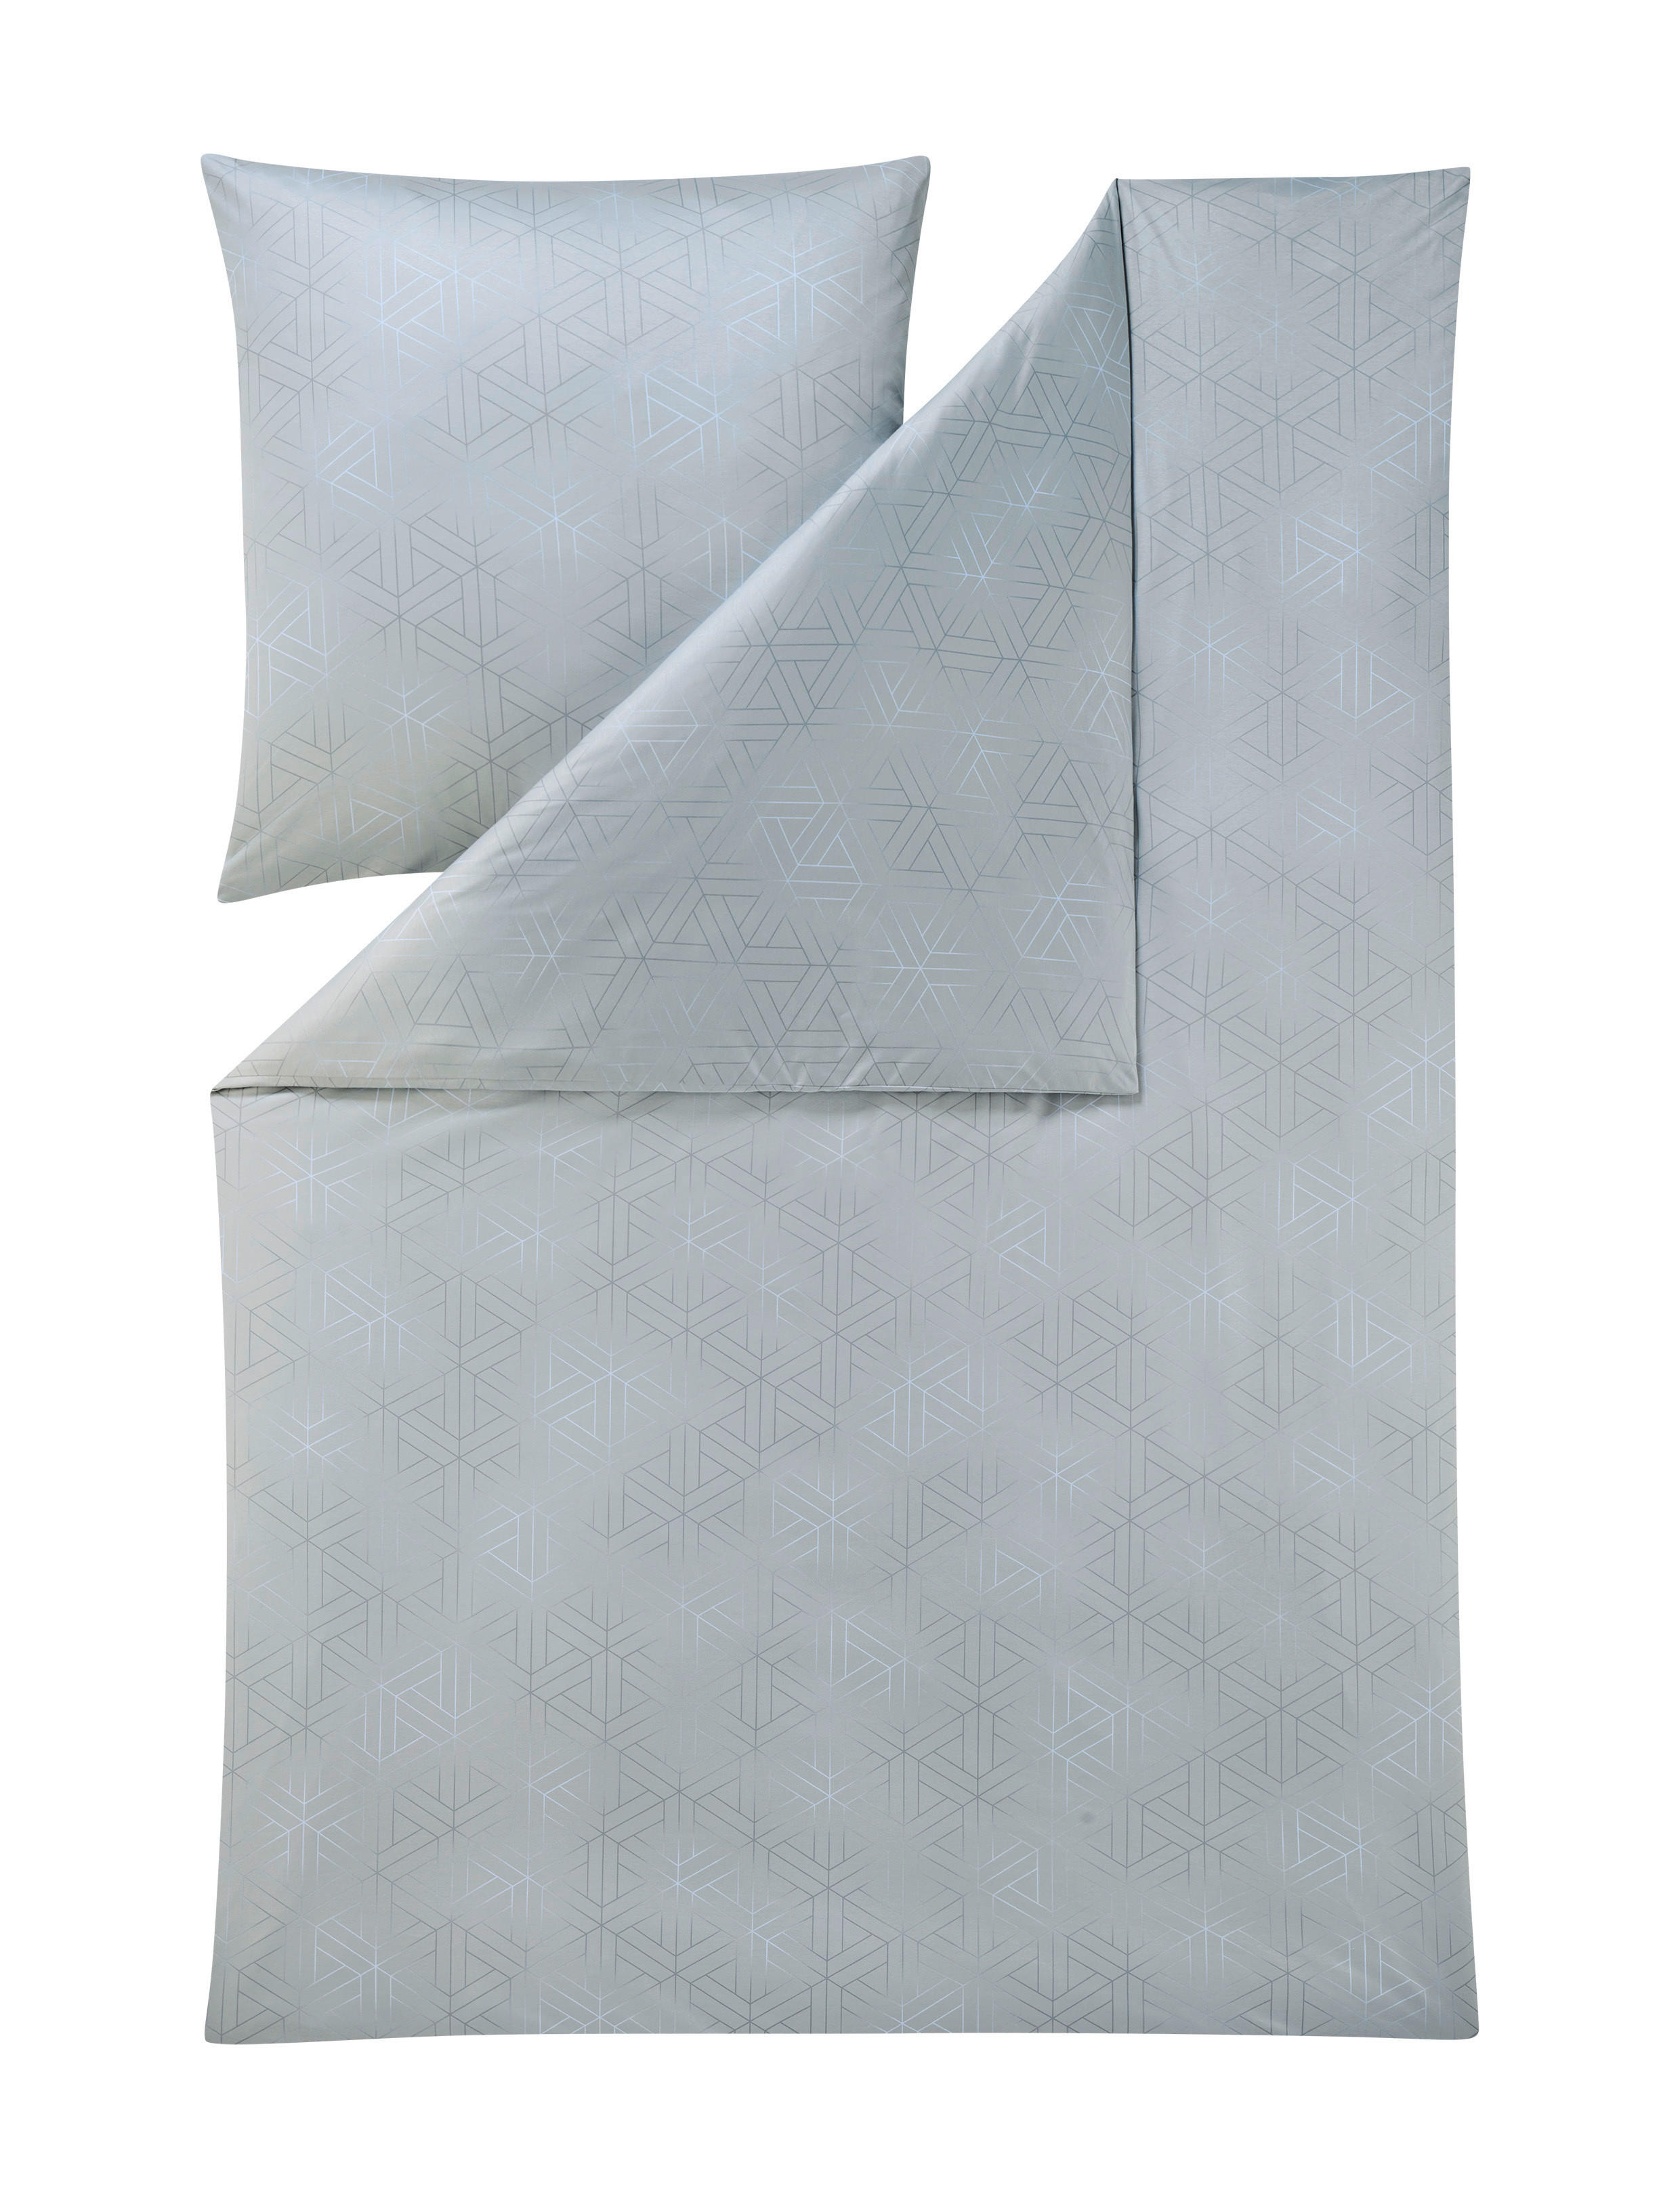 BETTWÄSCHE 135/200 cm  - Grau, Basics, Textil (135/200cm) - Estella